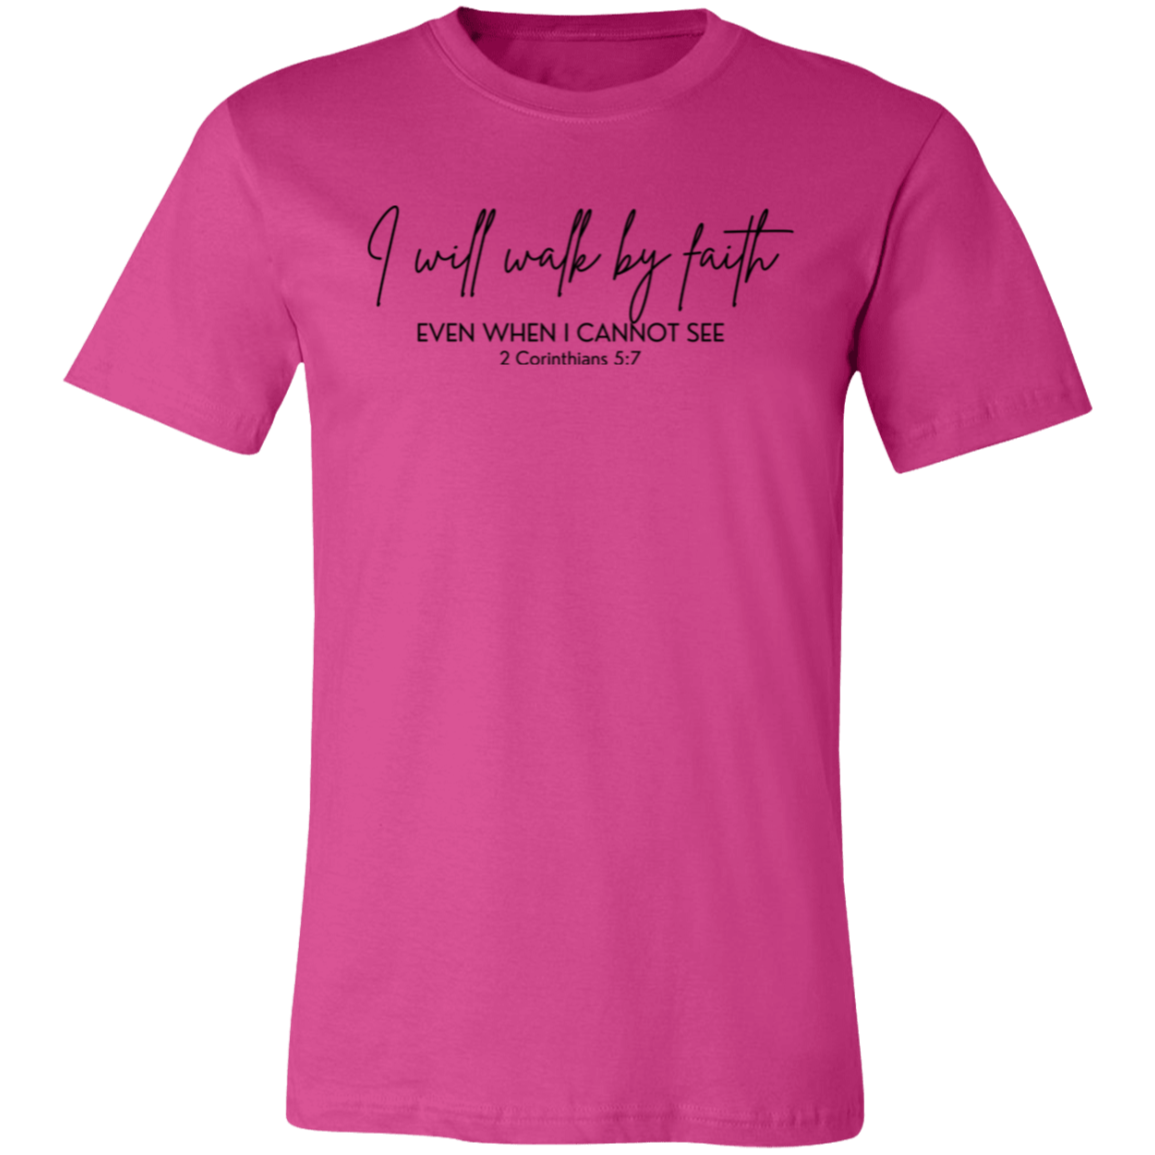 Walk By Faith T-Shirt